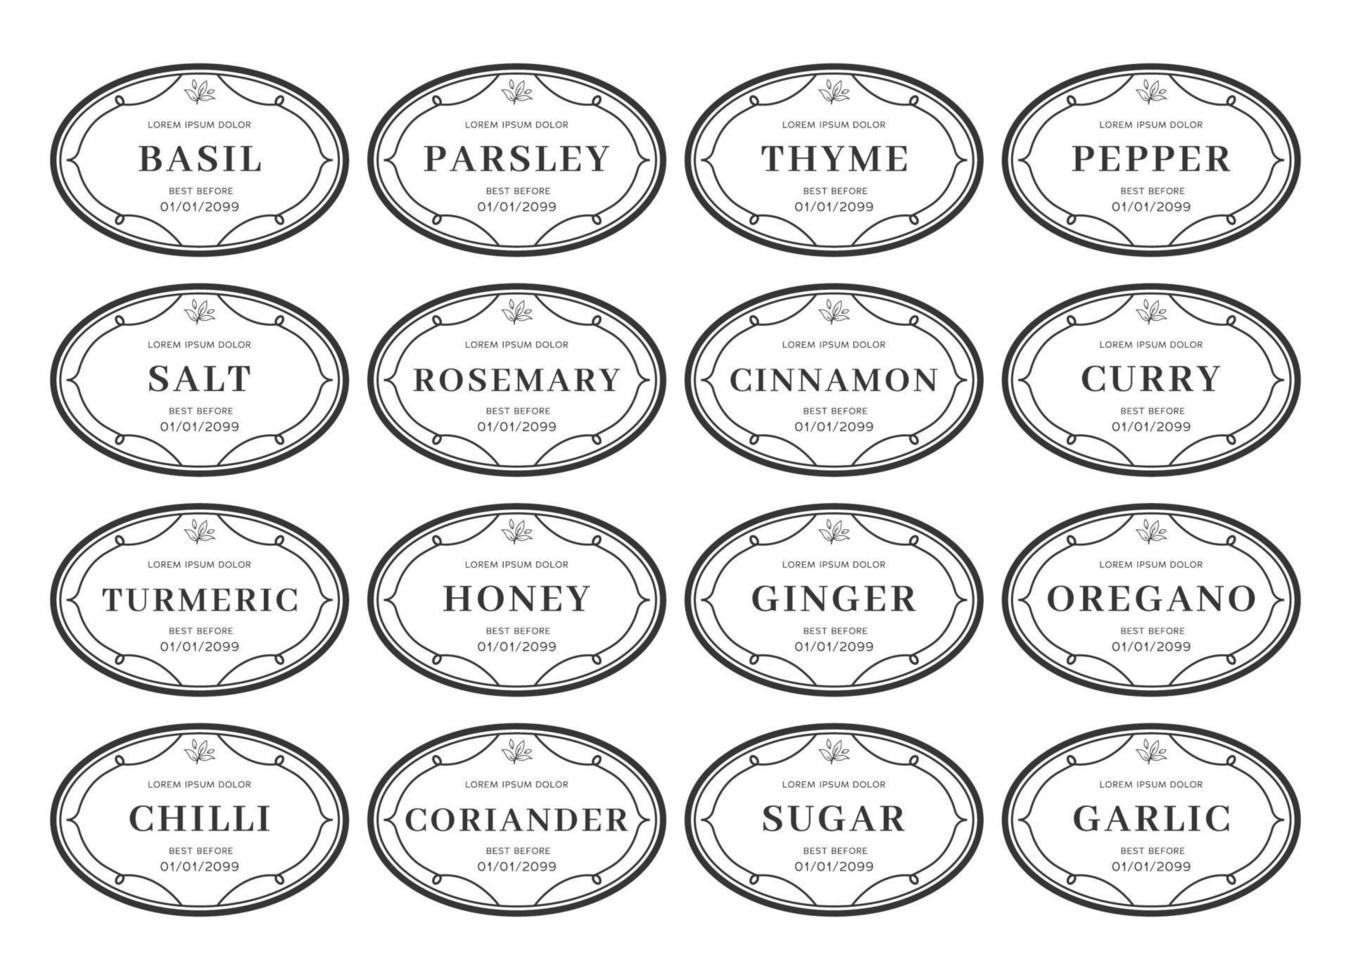 Seasoning kitchen pantry label sticker set organizer black white vintage style vector